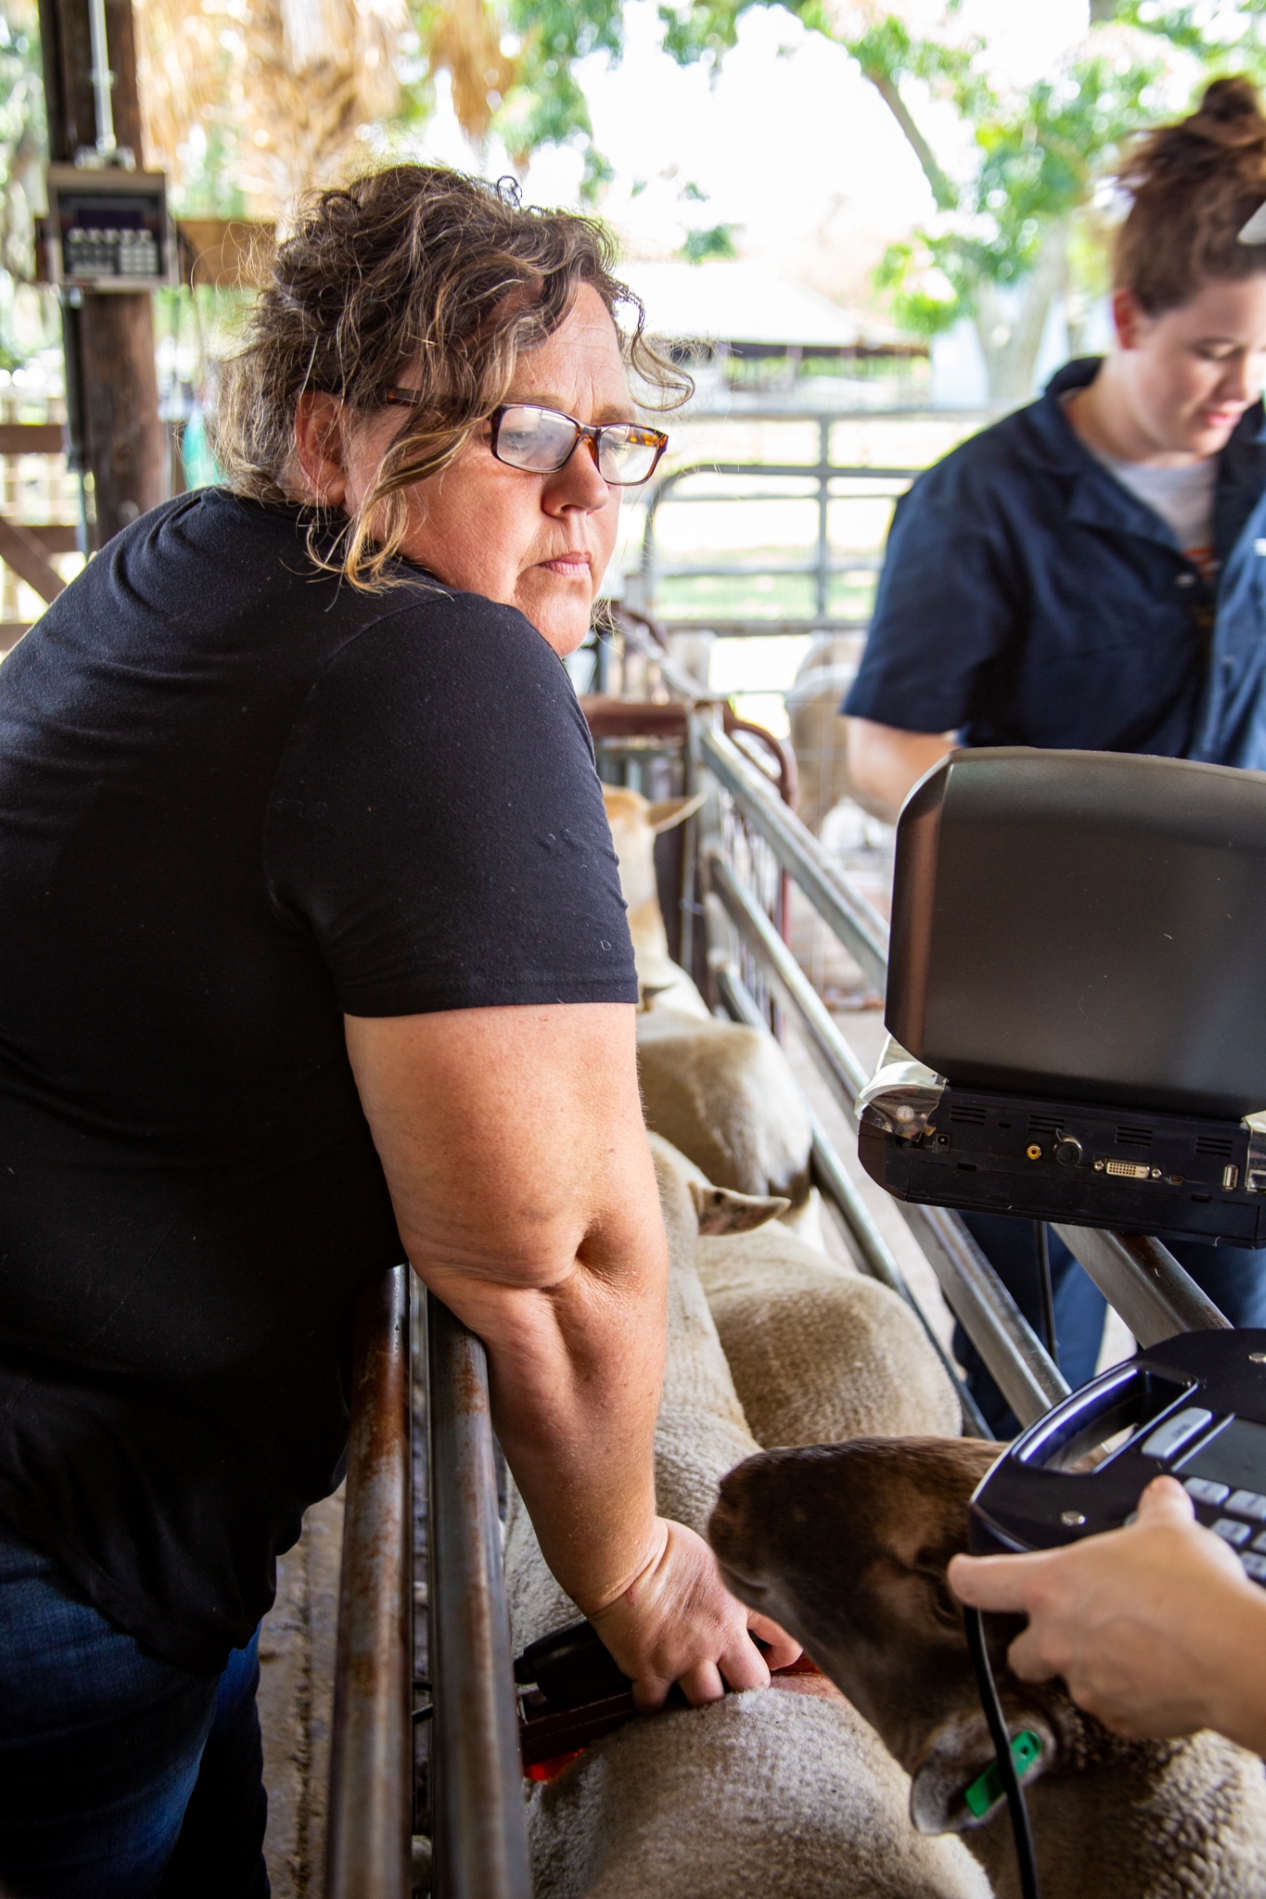 Amy Perryman ultrasounding a sheep